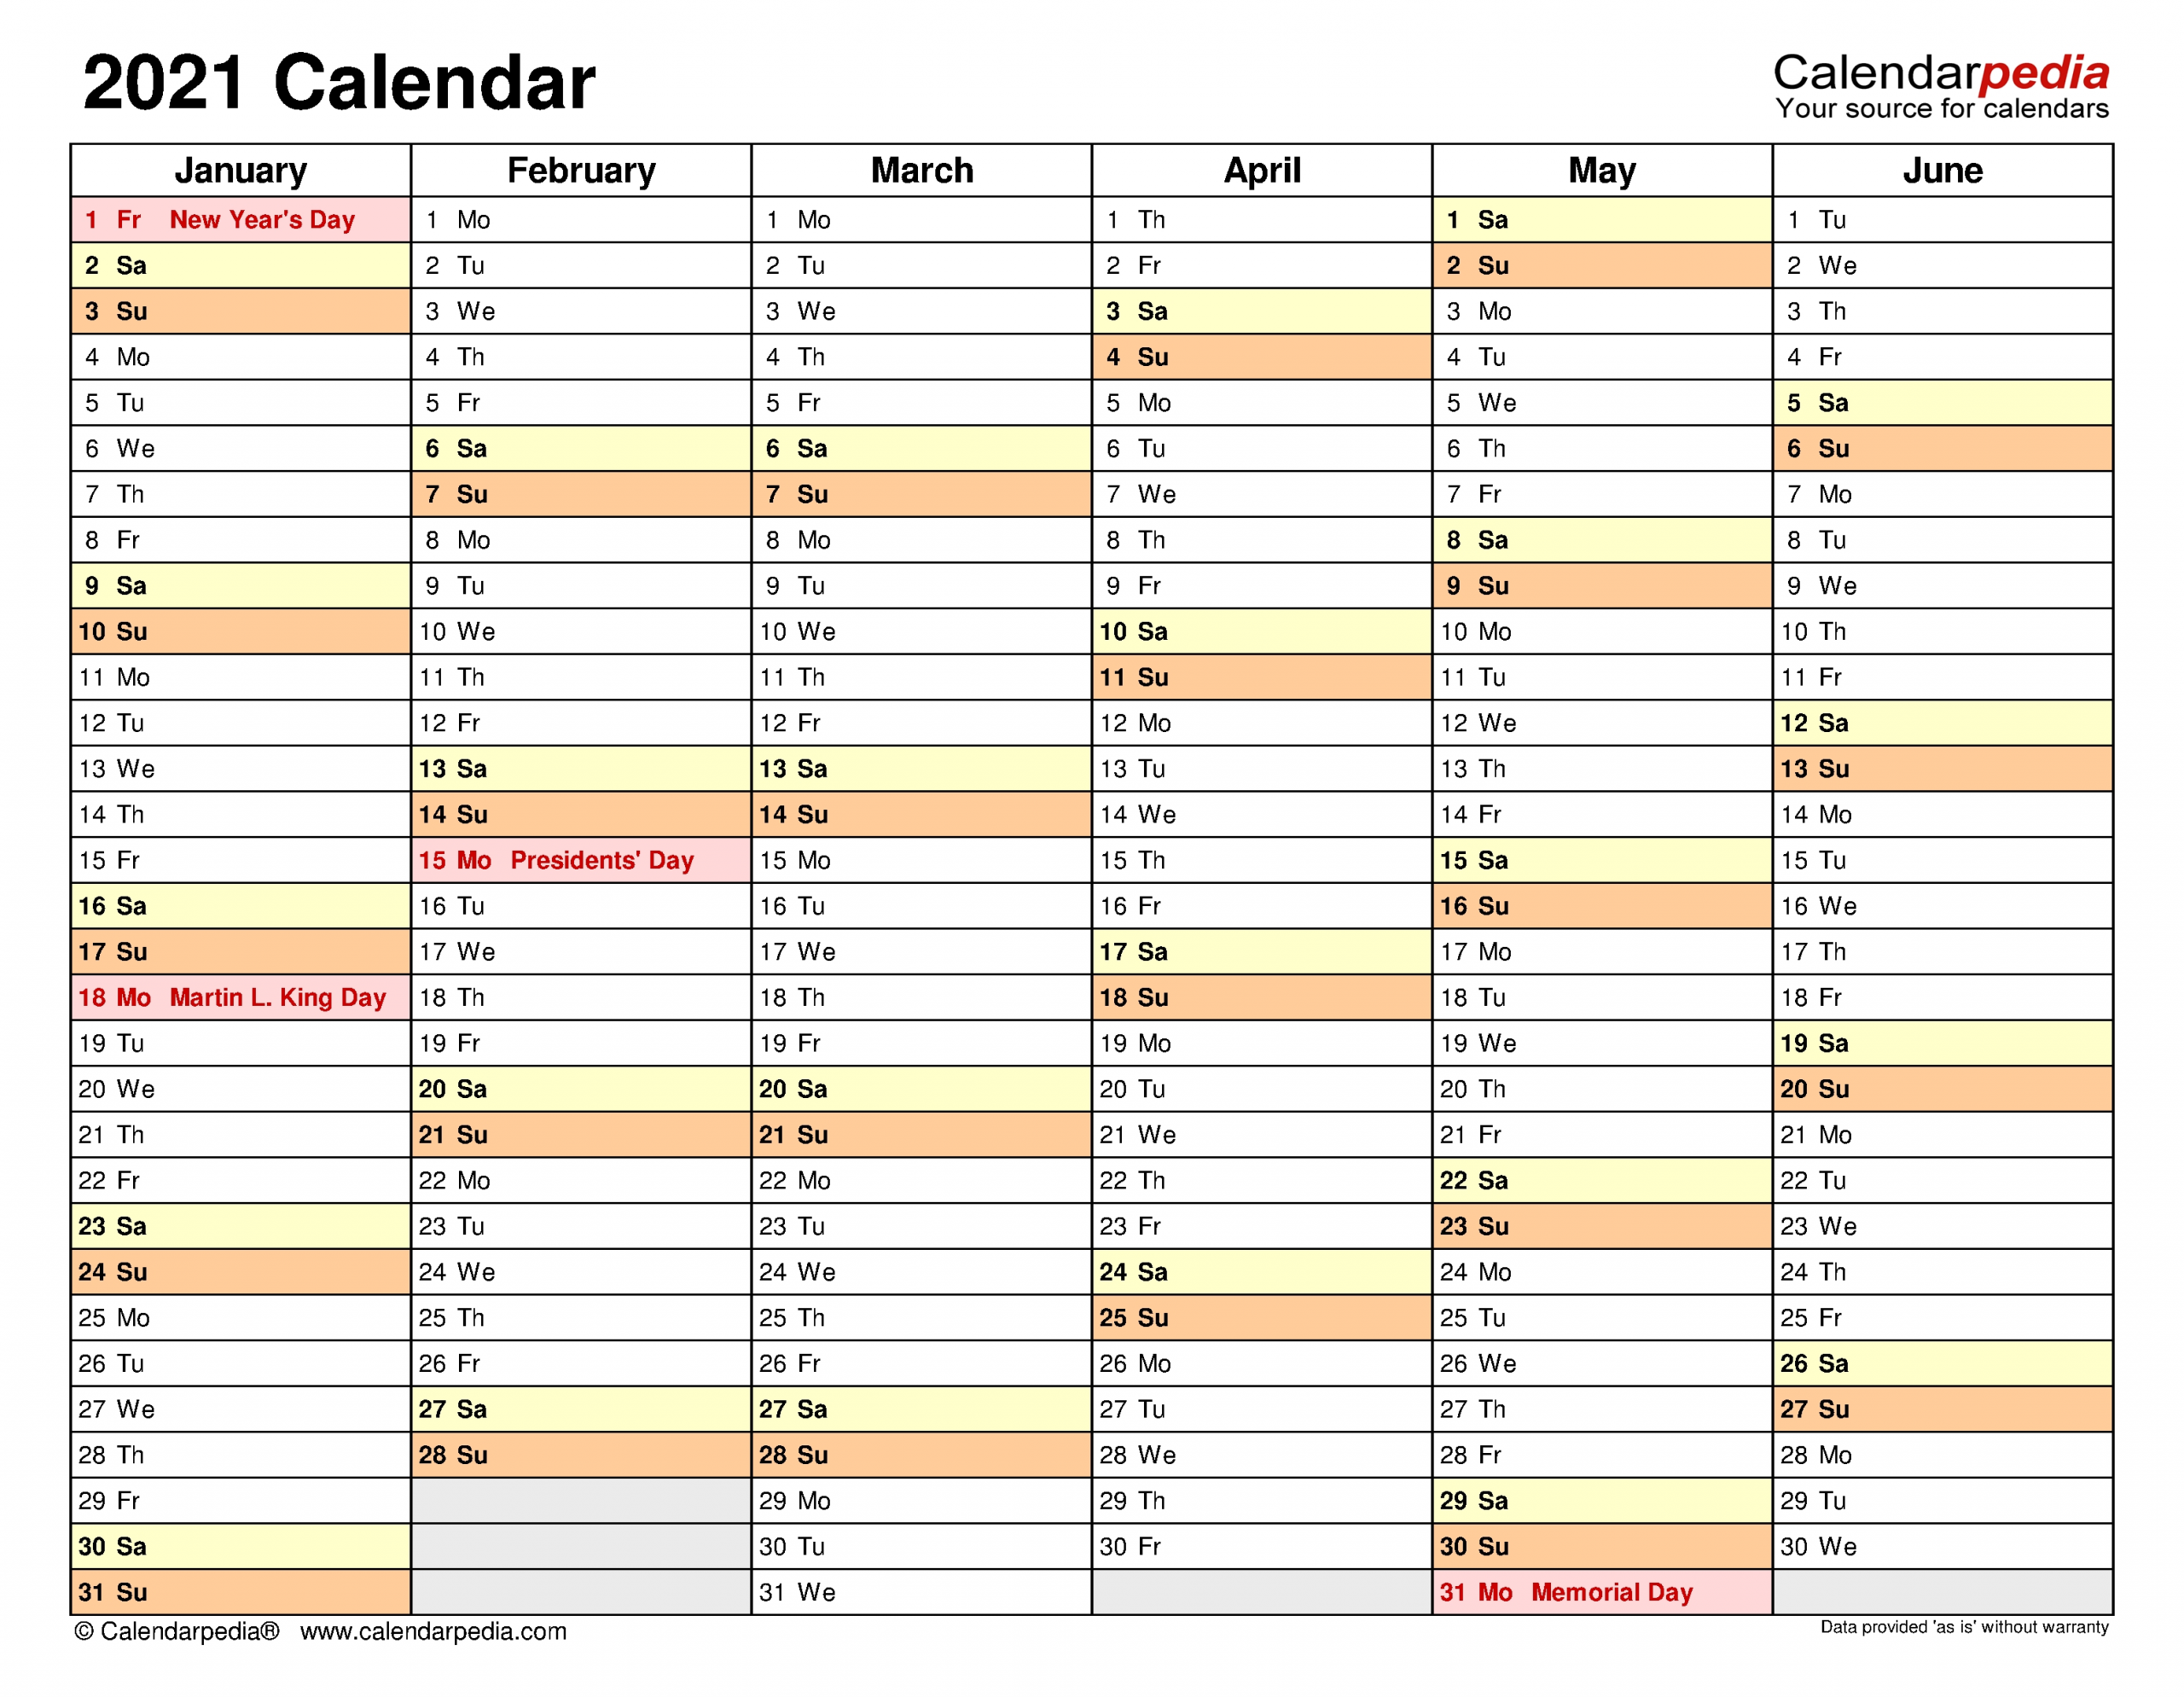 2021 Calendar - Free Printable Excel Templates - Calendarpedia-Microsoft Calendar Templates 2021 2 Page Per Month Printable